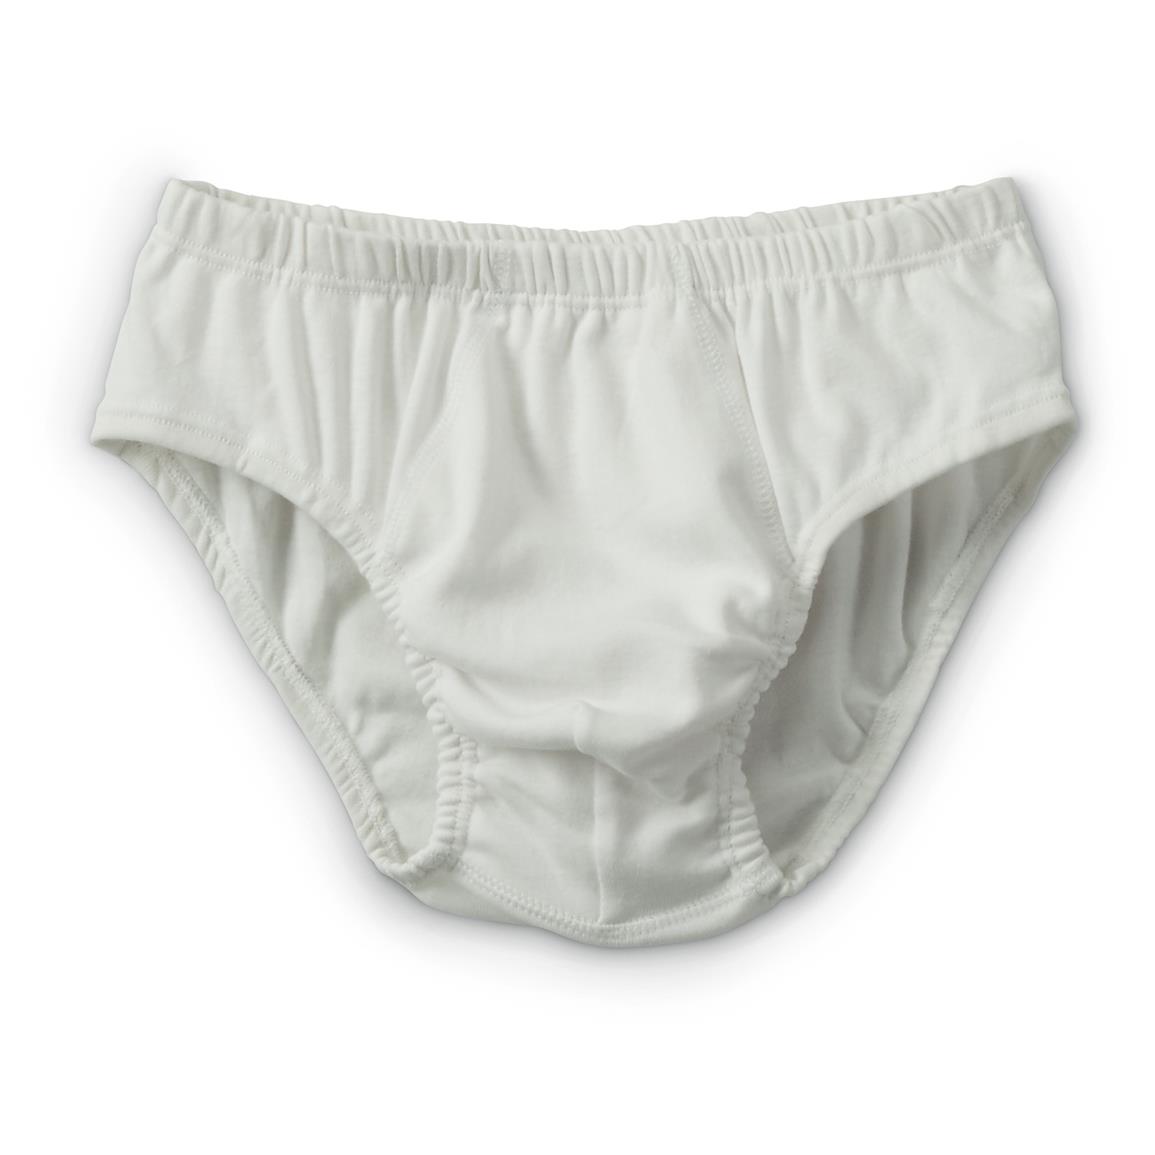 underpants in spanish